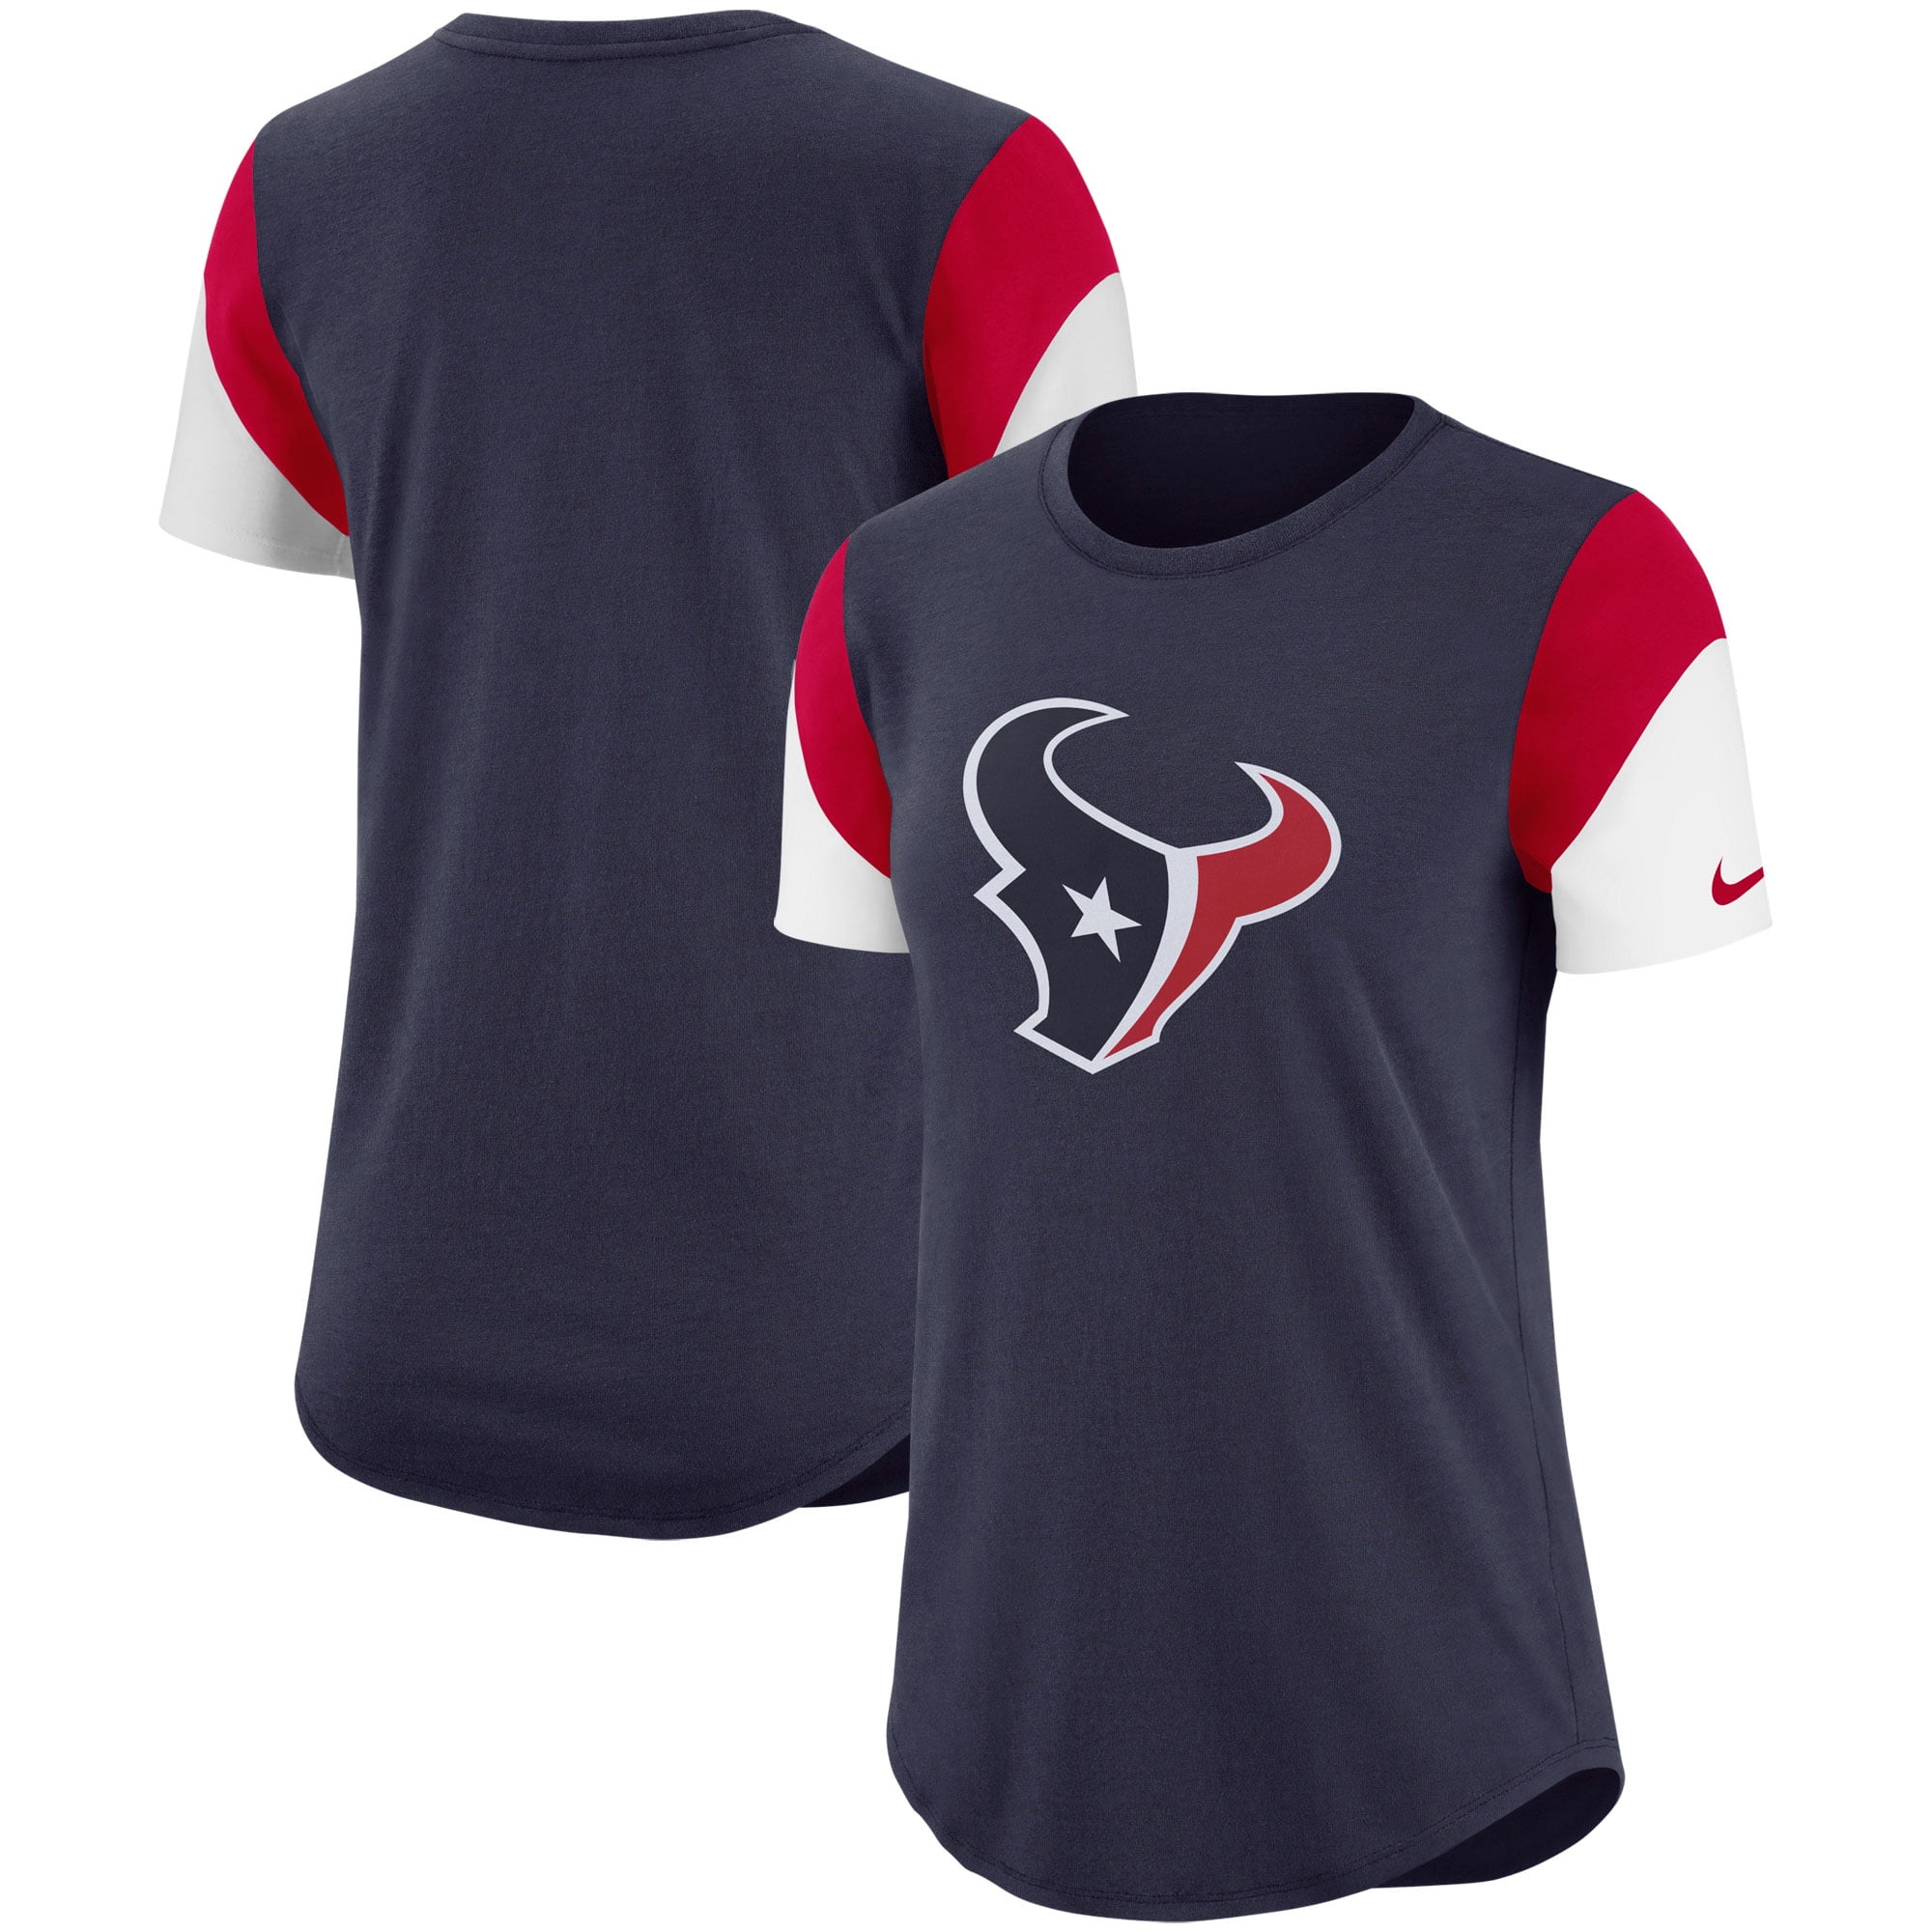 معجون للاسنان الحساسة Women's Nike Navy/Red Houston Texans Tri-Blend Team Fan T-Shirt ... معجون للاسنان الحساسة